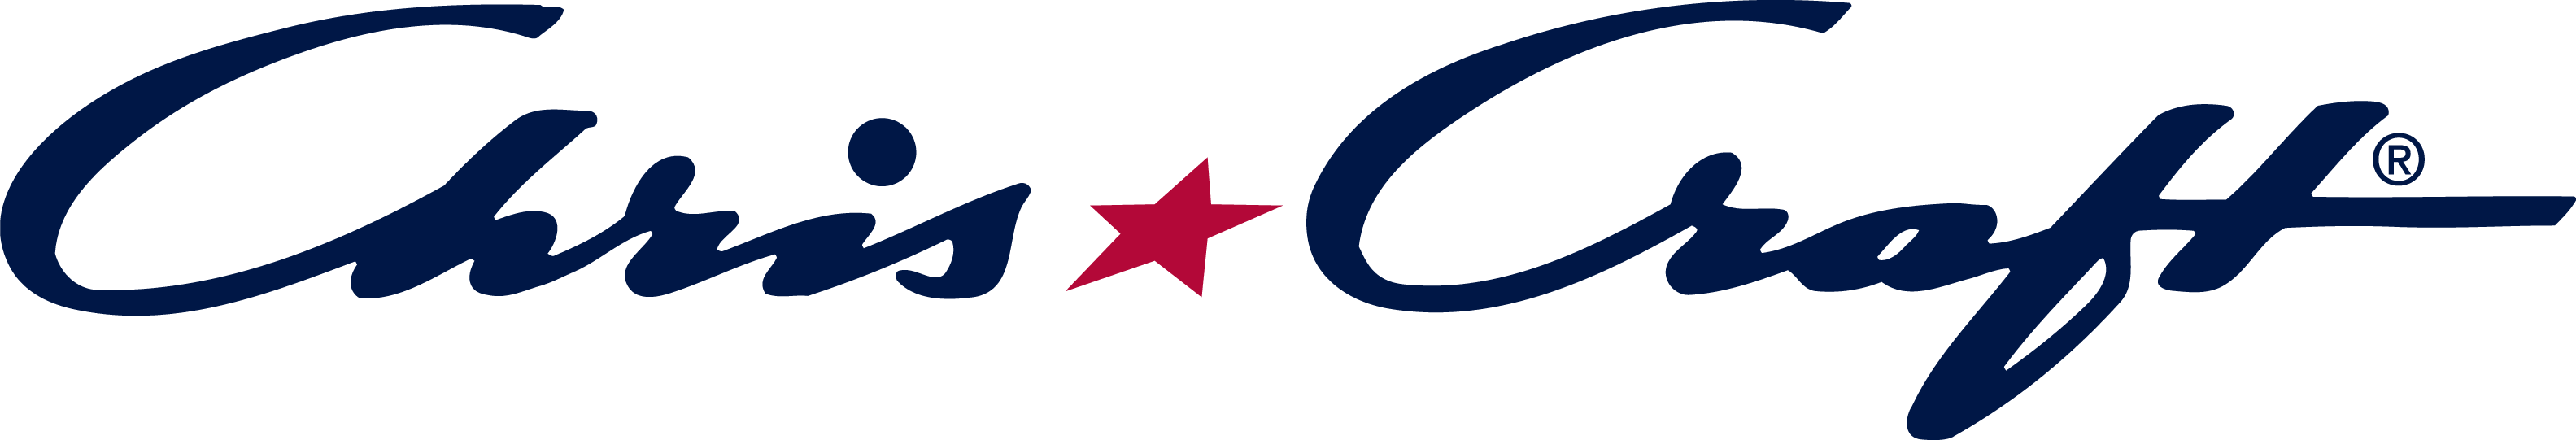 Chris-Craft brand logo